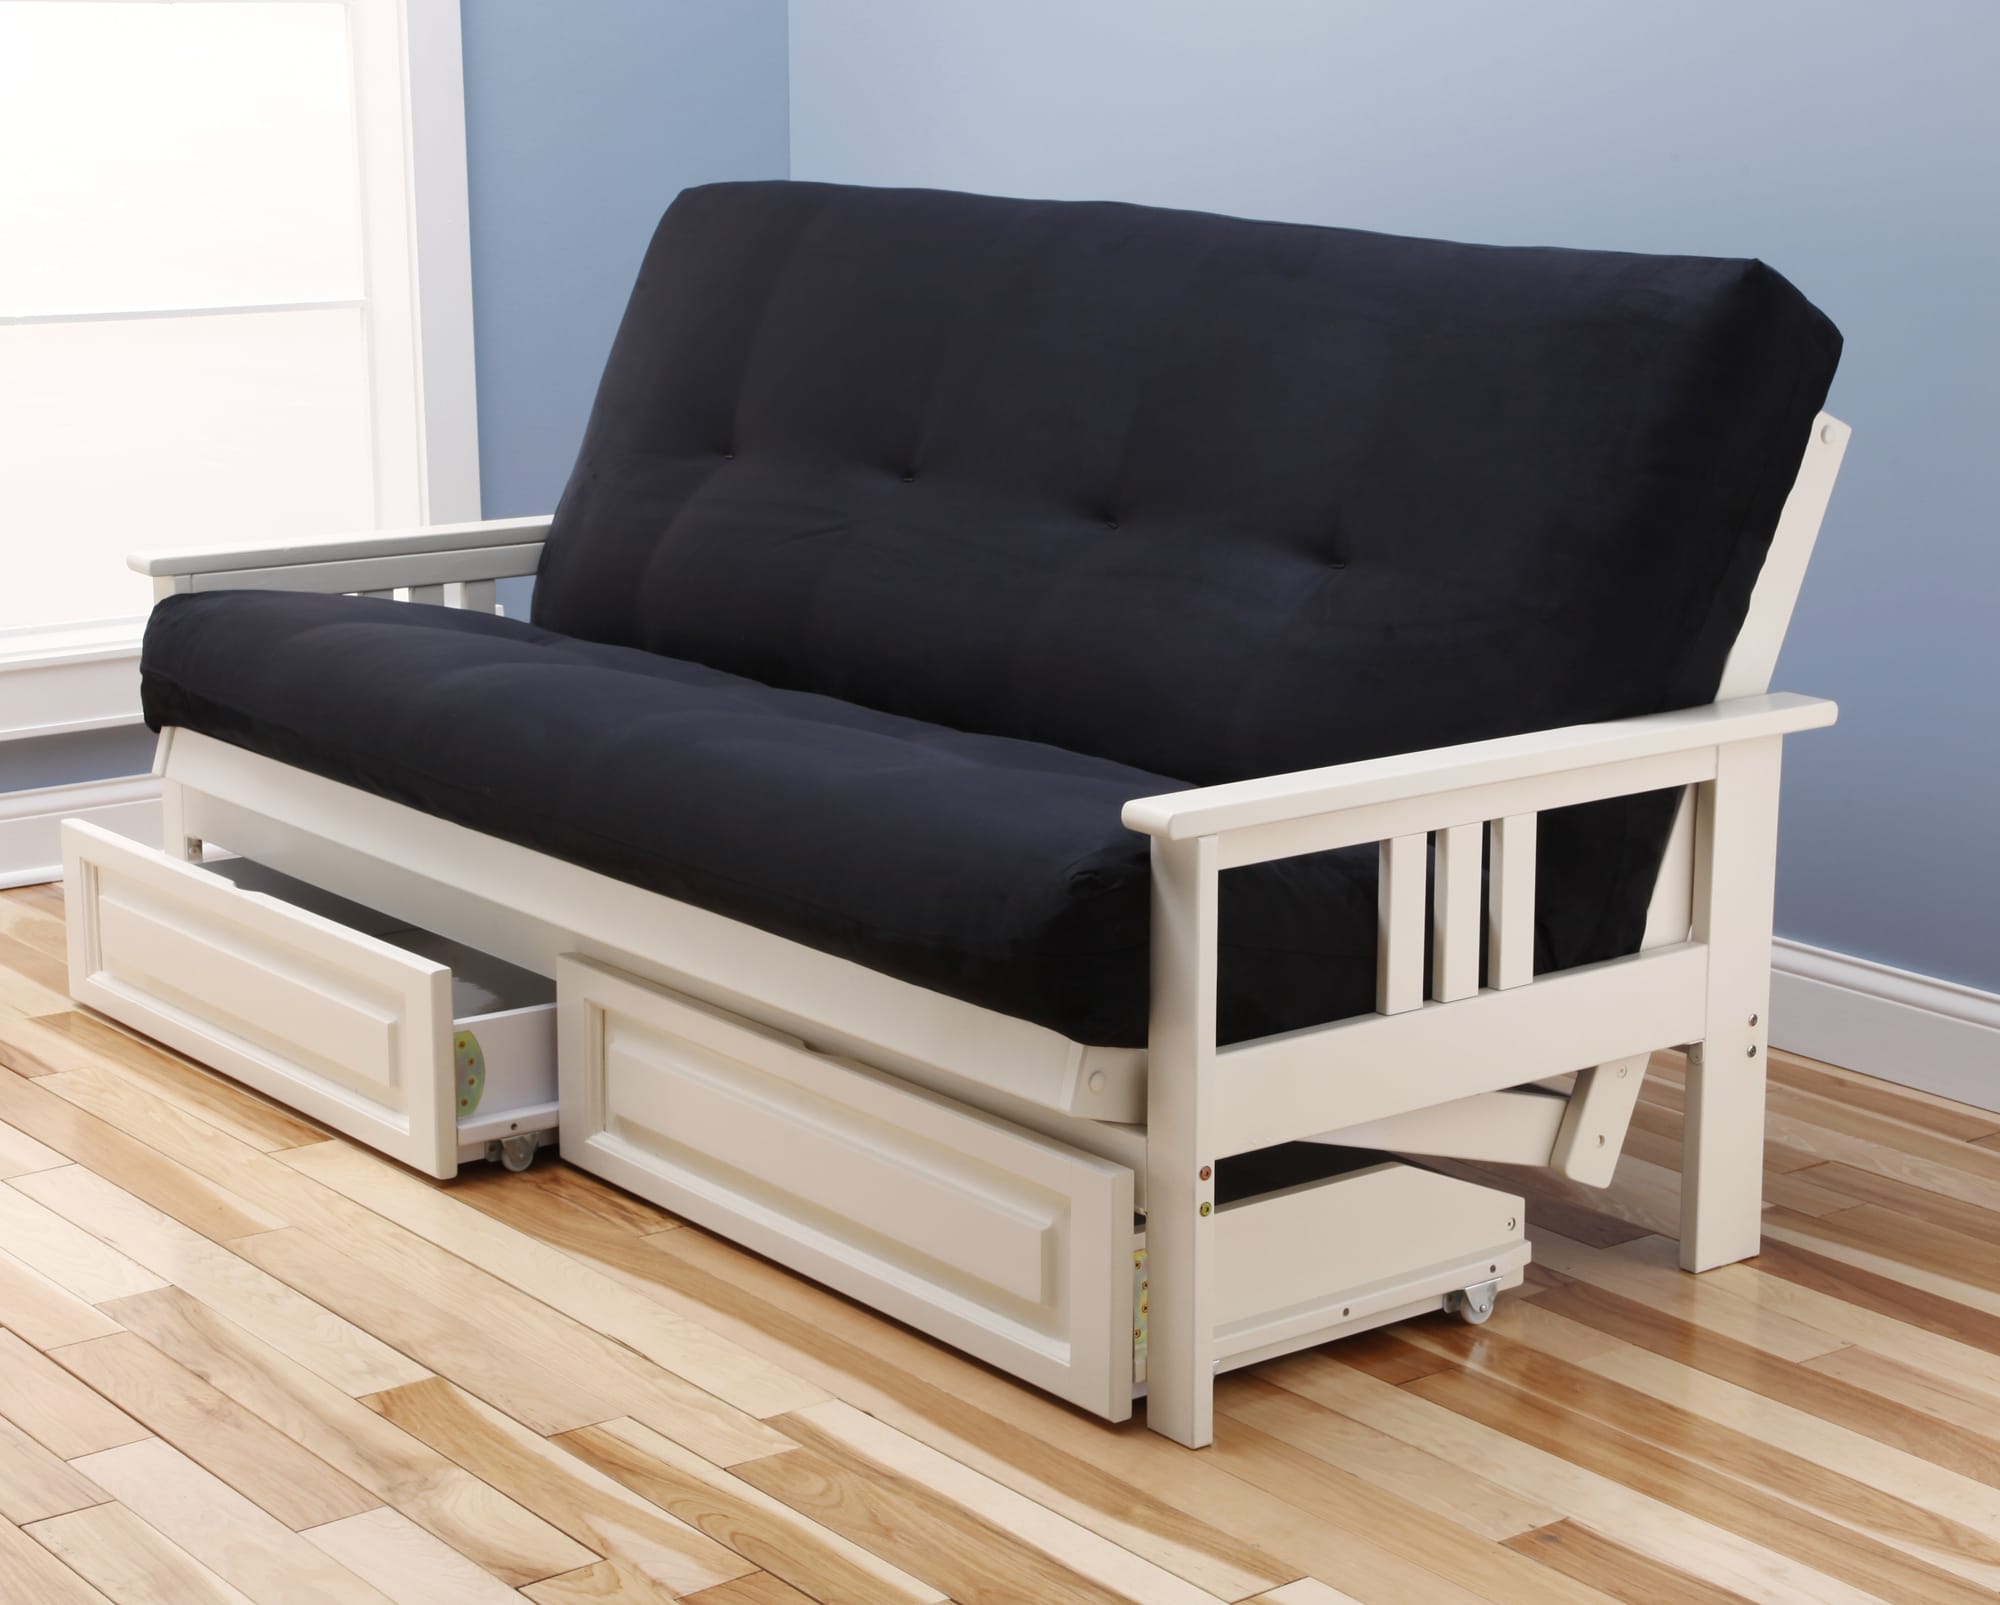 cheap futon mattress for sale